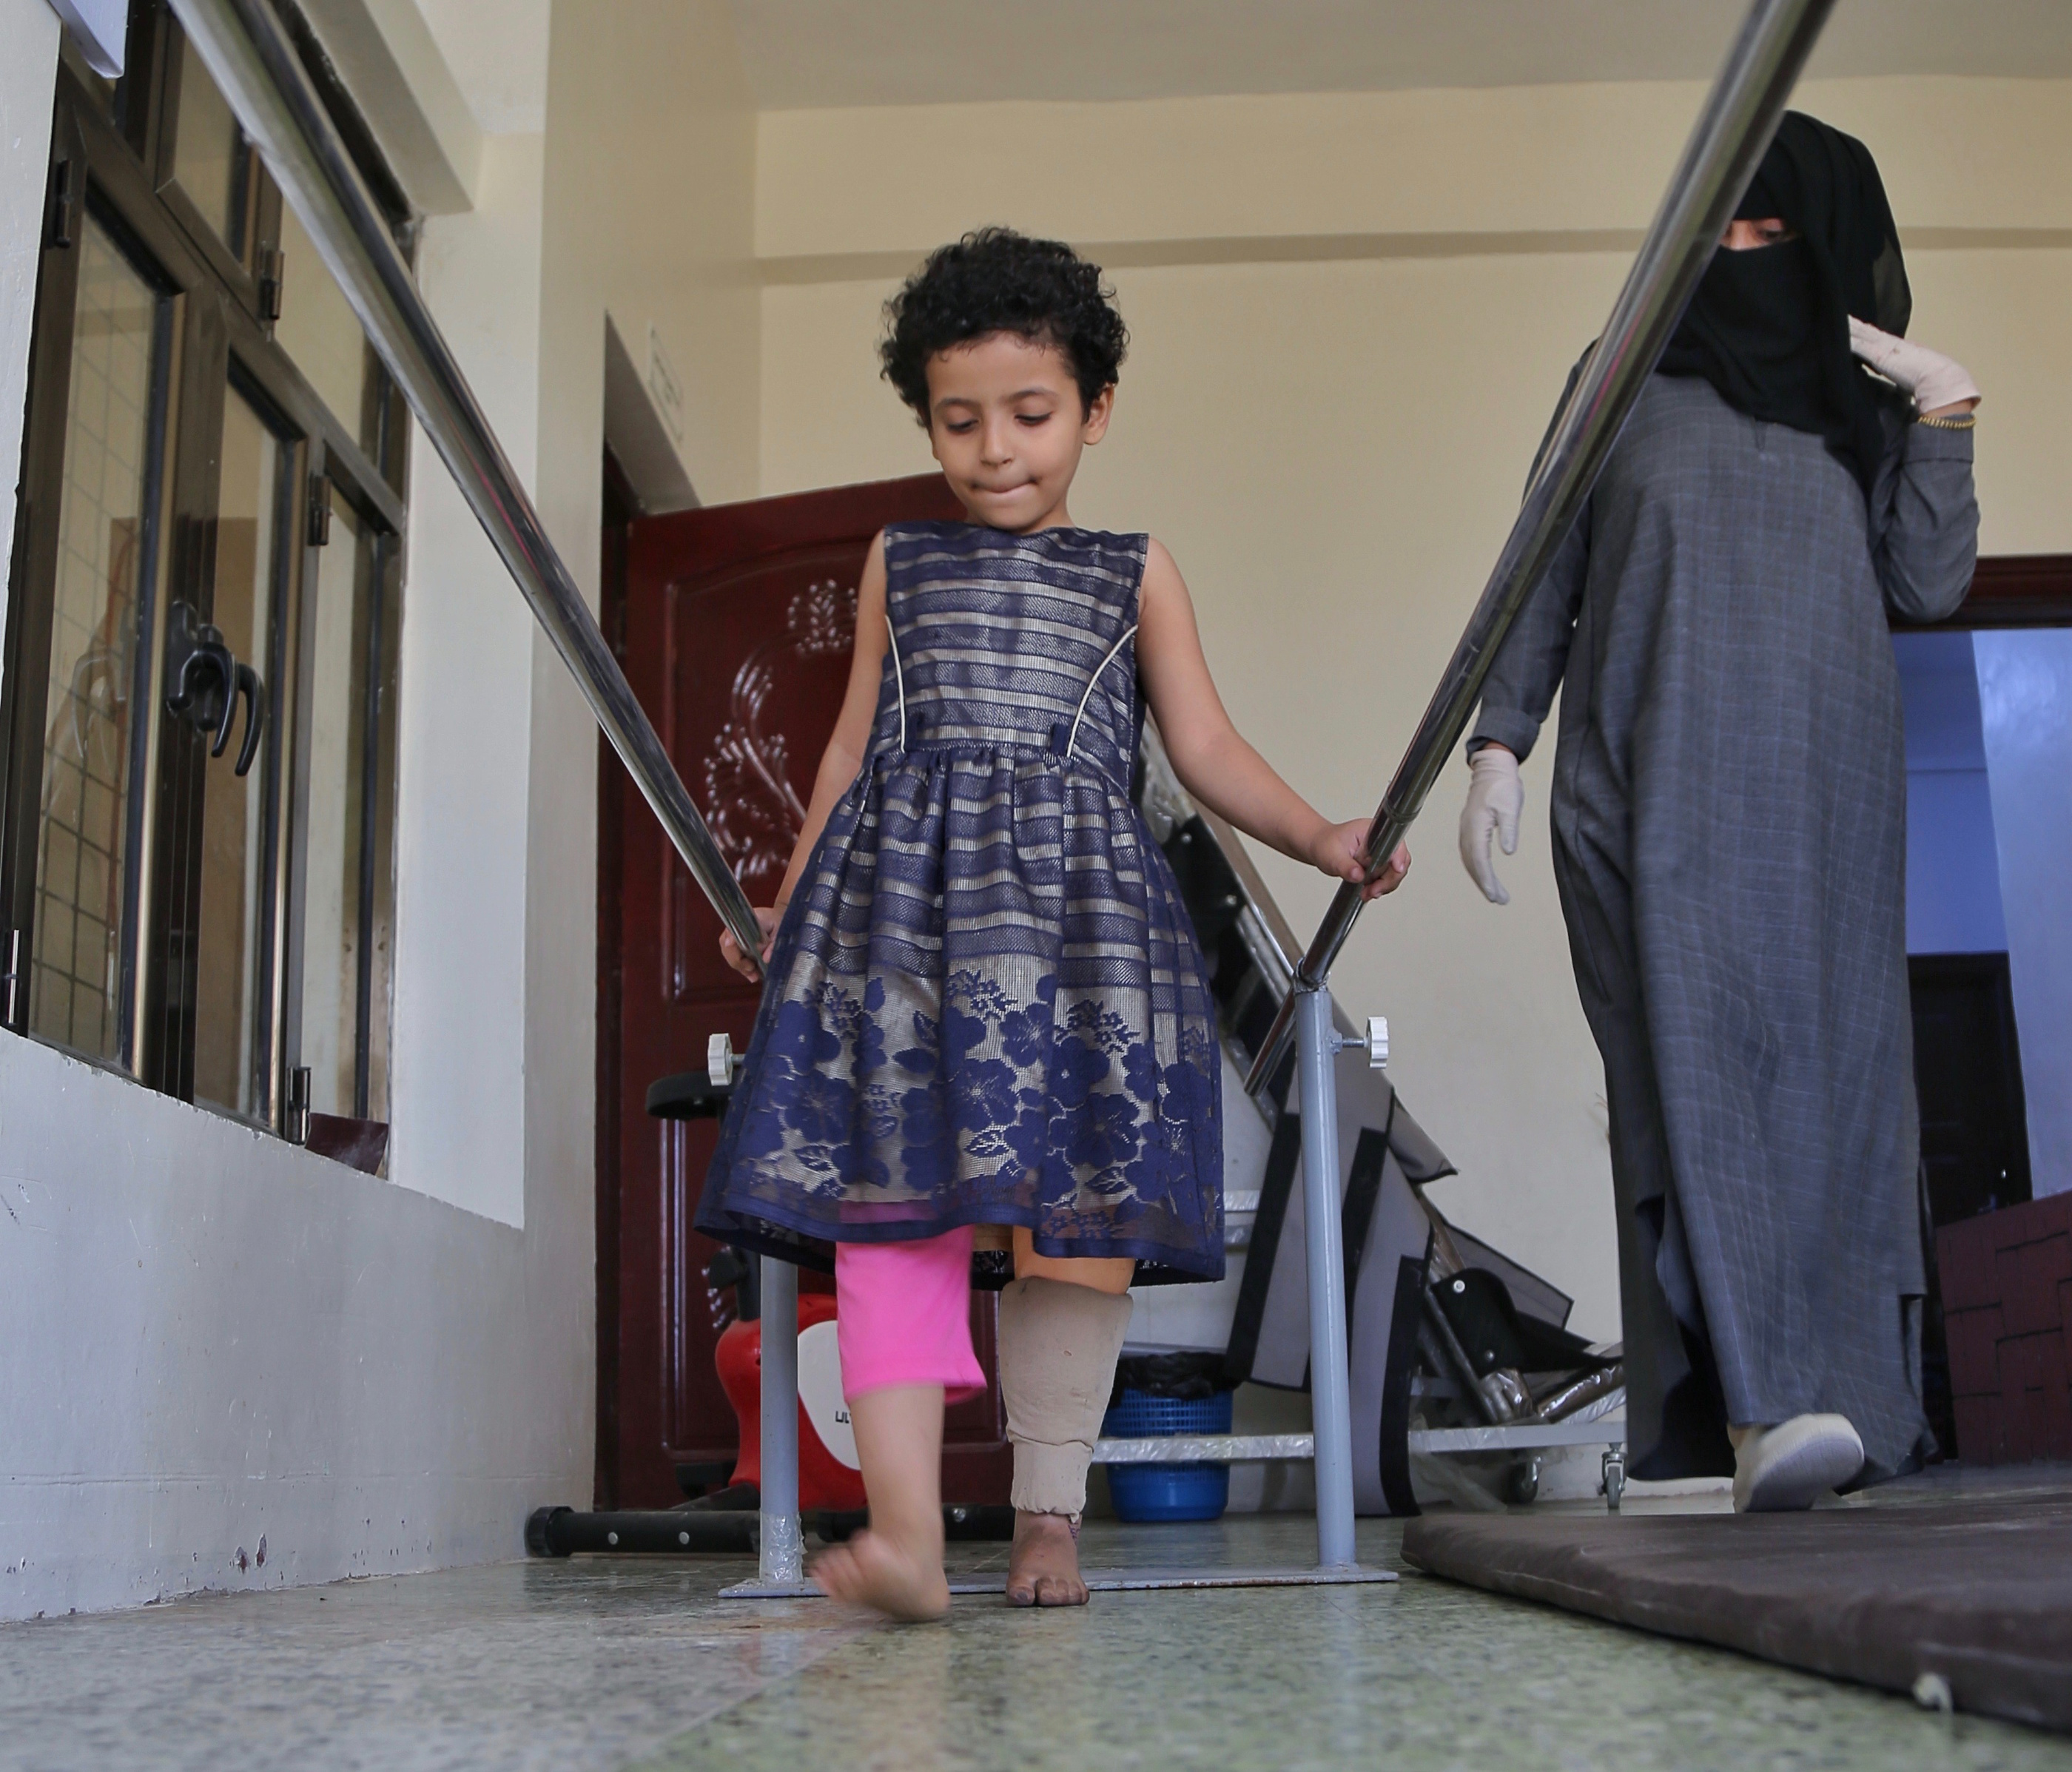 Yemen's disabled